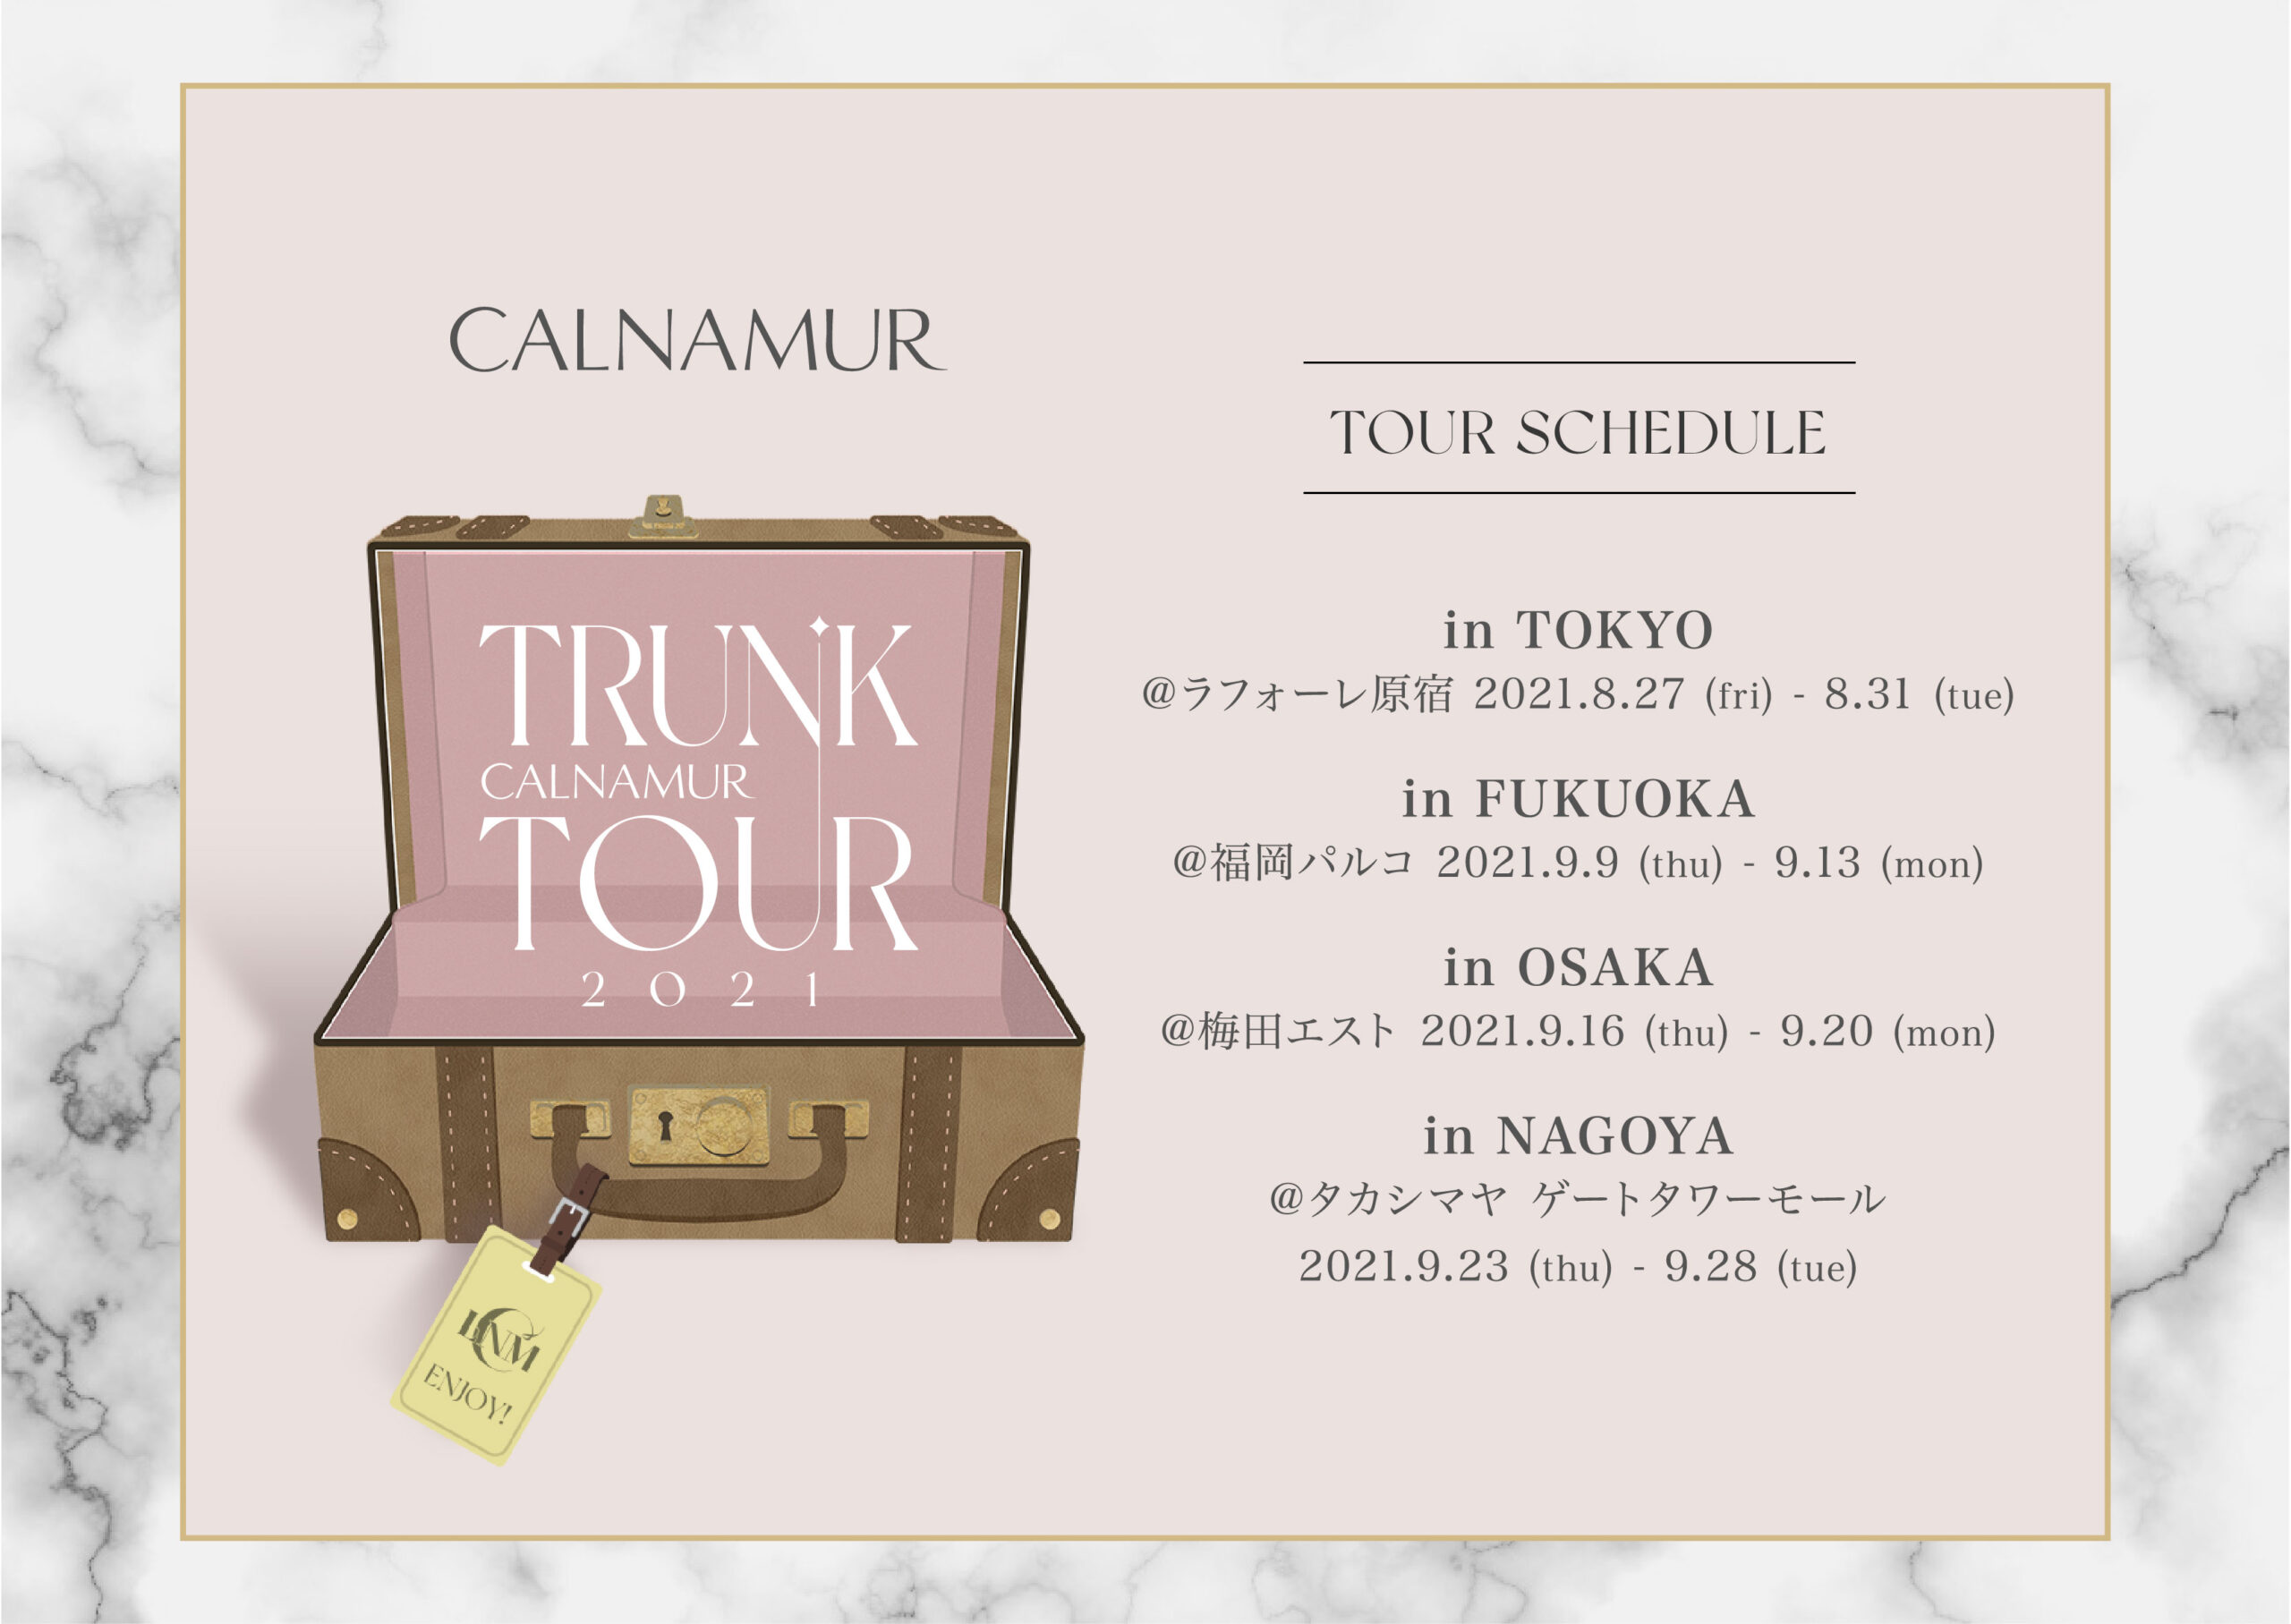 CALNAMUR TRUNK TOUR 2021開催決定